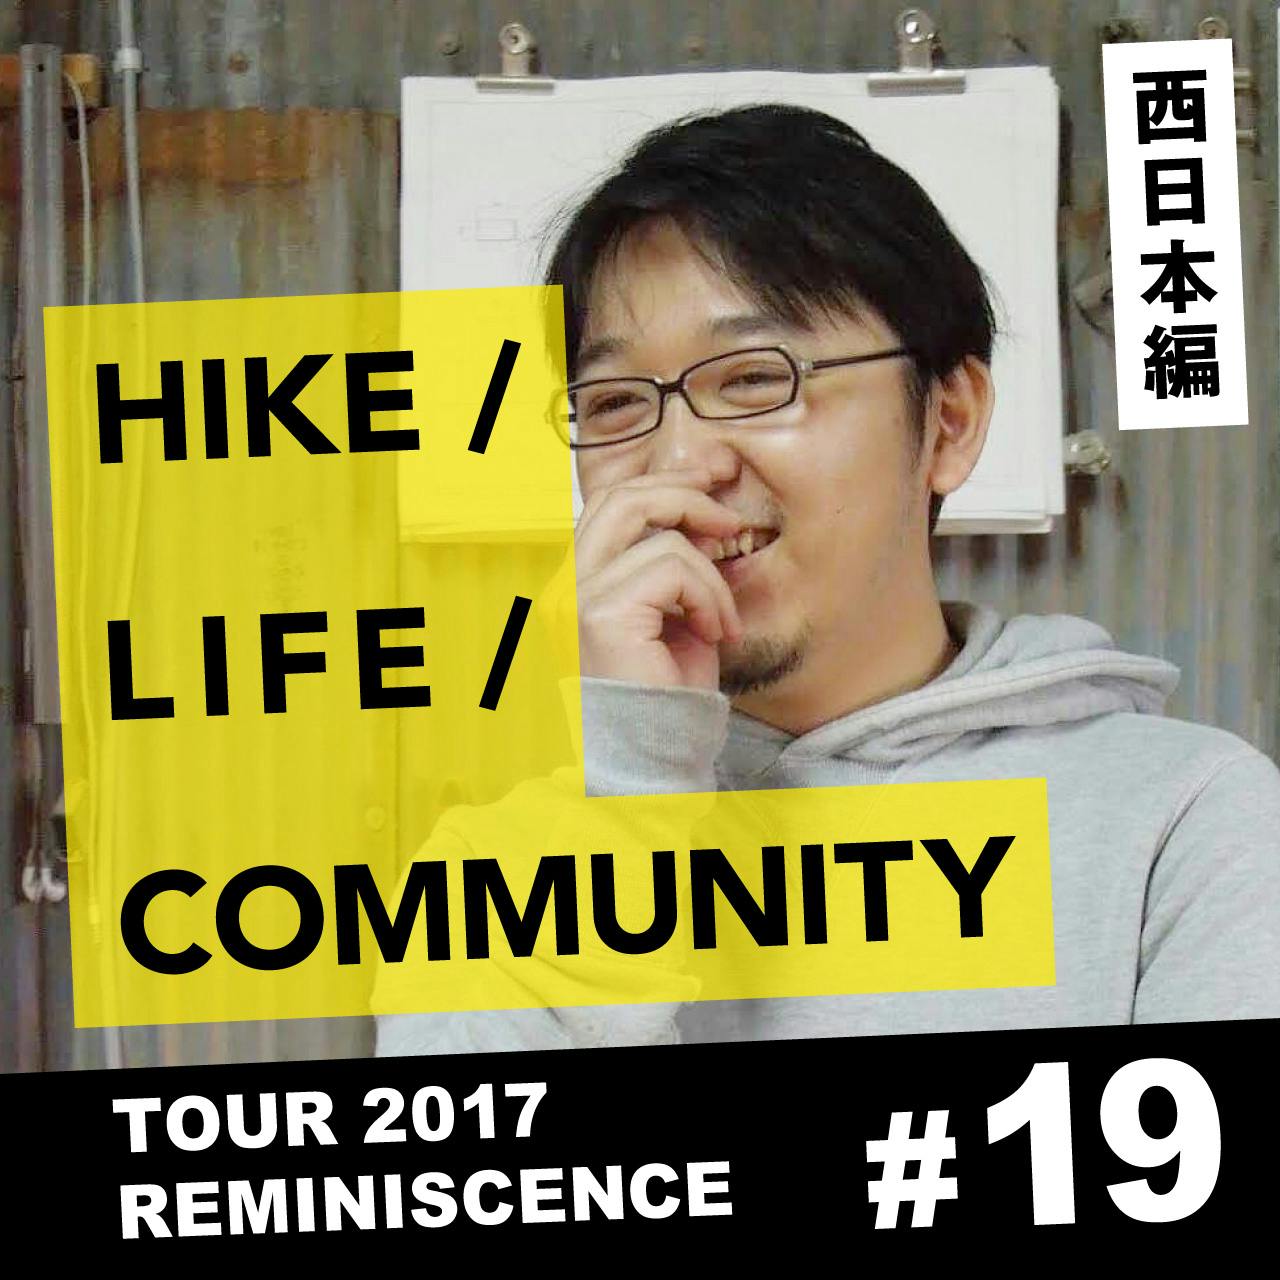 HIKE / LIFE / COMMUNITY TOUR 2017 REMINISCENCE #19 松村亮平